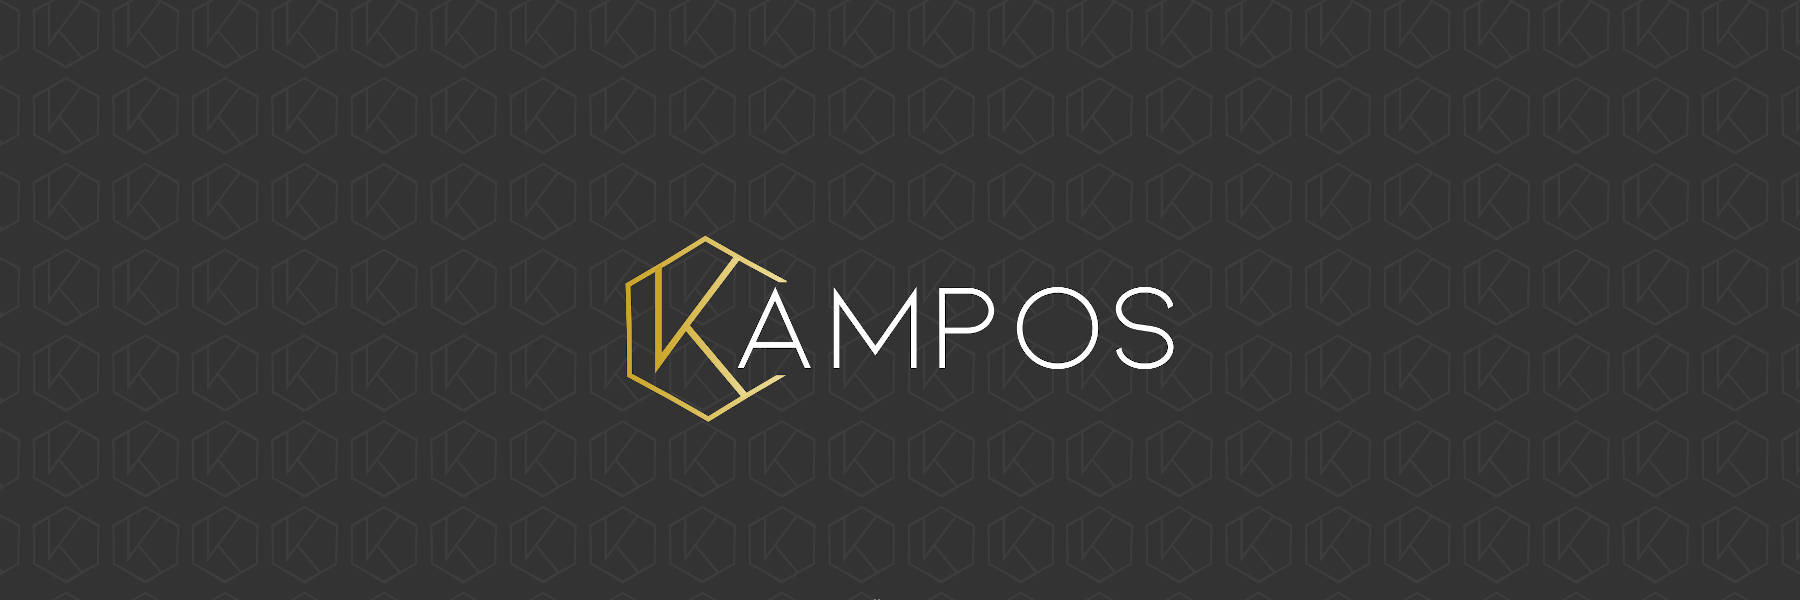 Kampos-identity_header